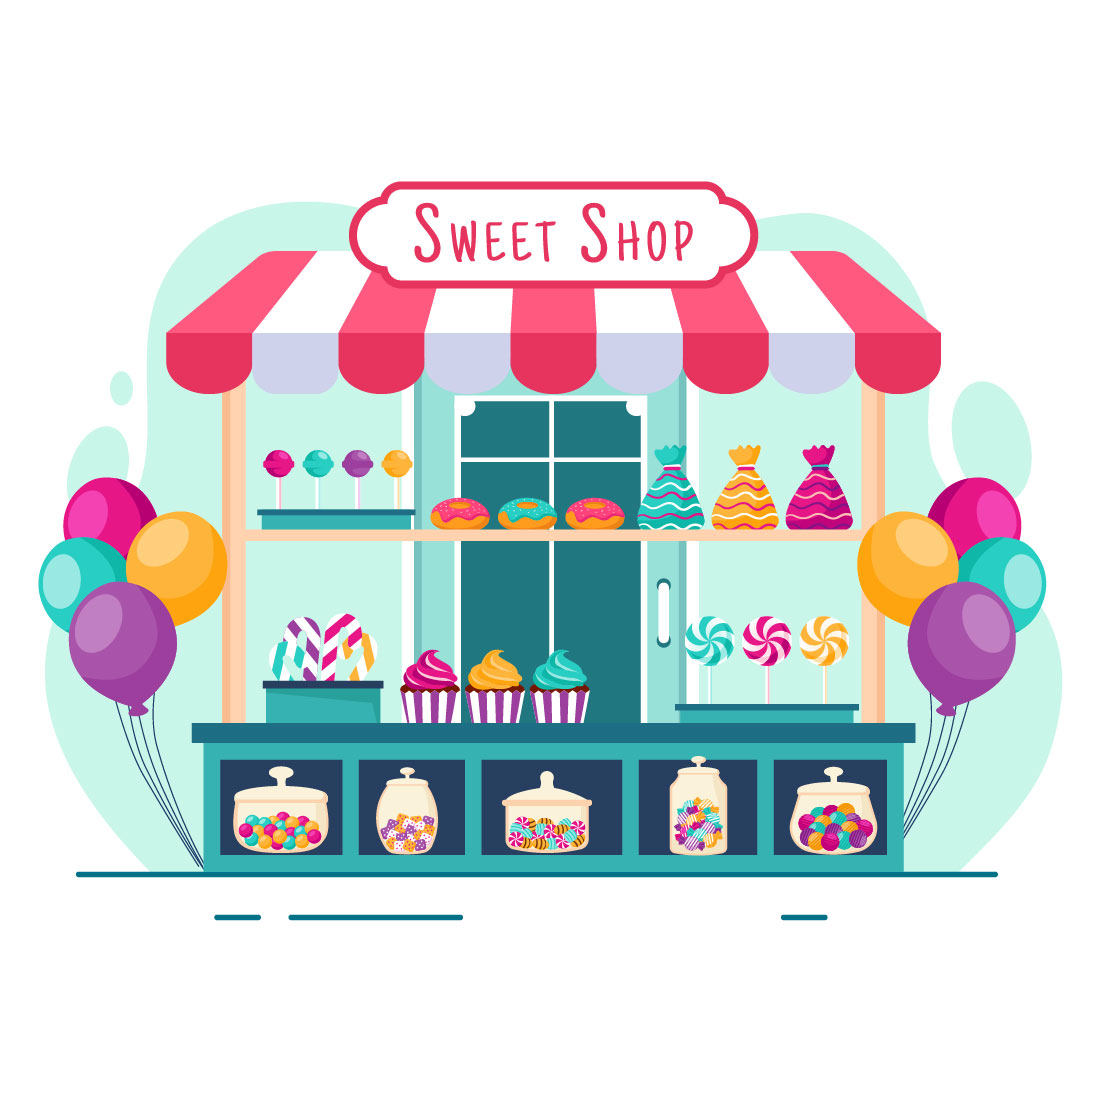 12 Sweet Shop Illustration cover image.